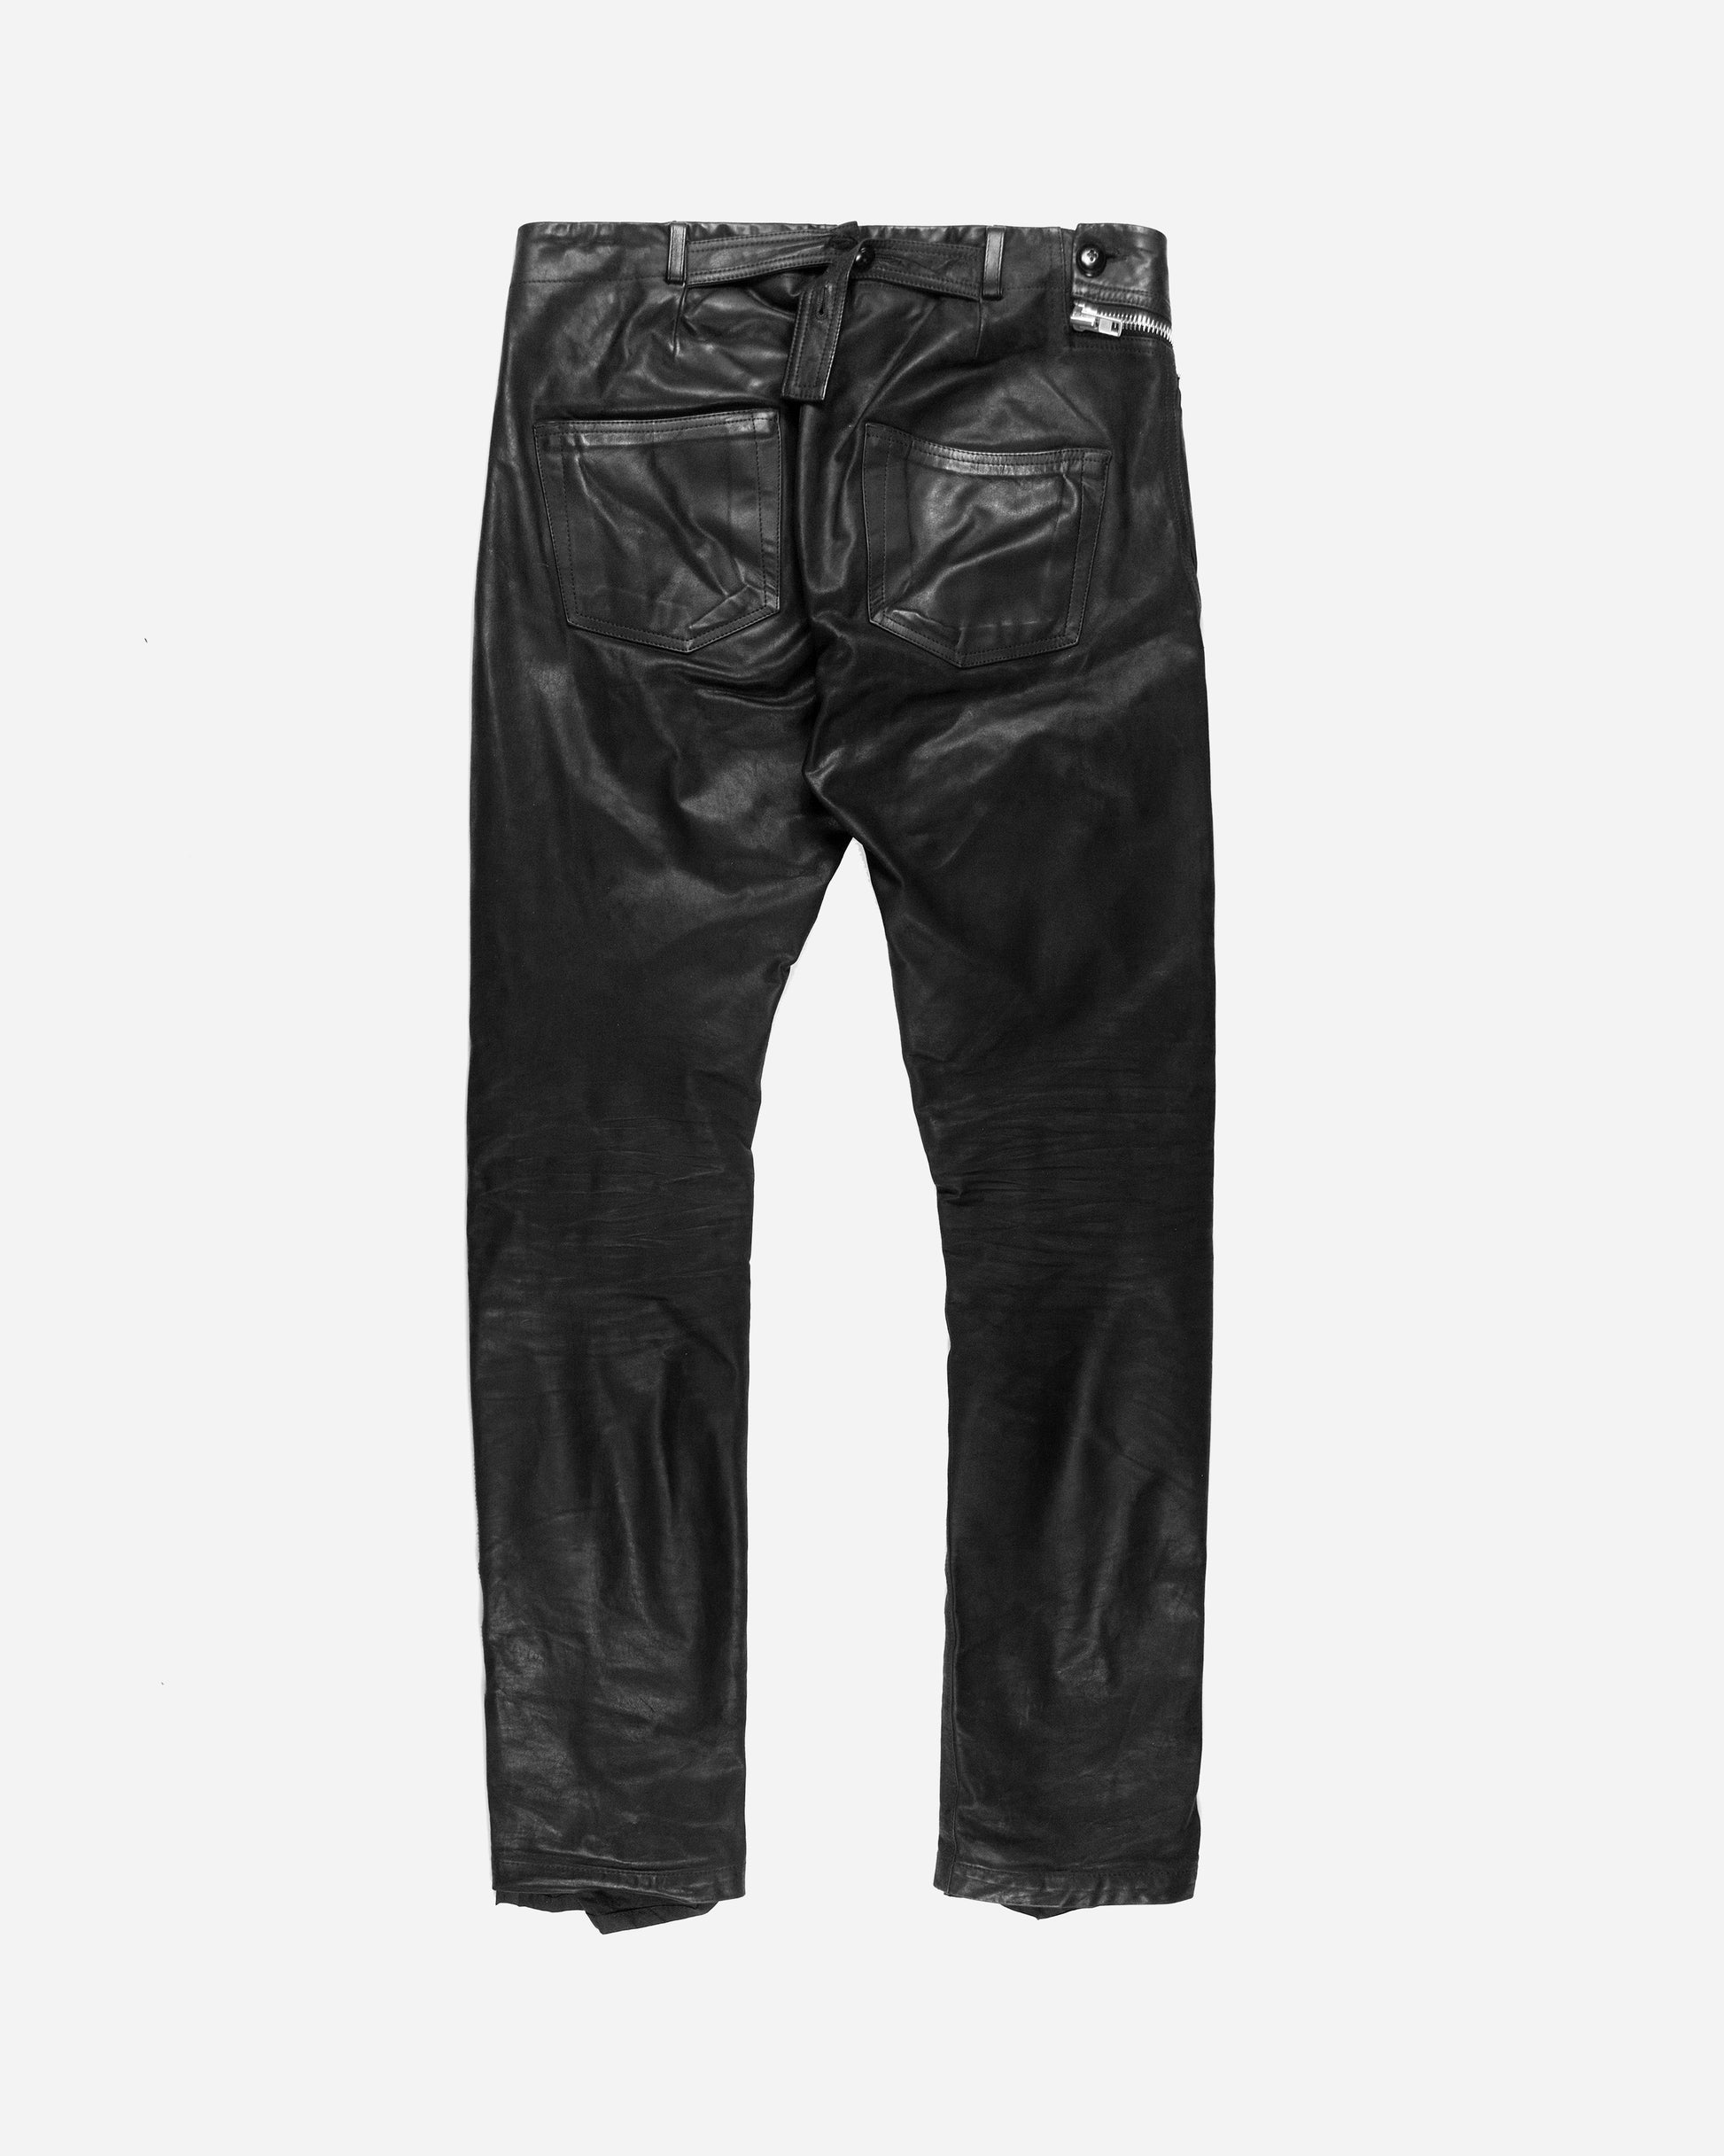 Rick Owens Leather Aircut Jeans - SS15 “Faun” - SILVER LEAGUE